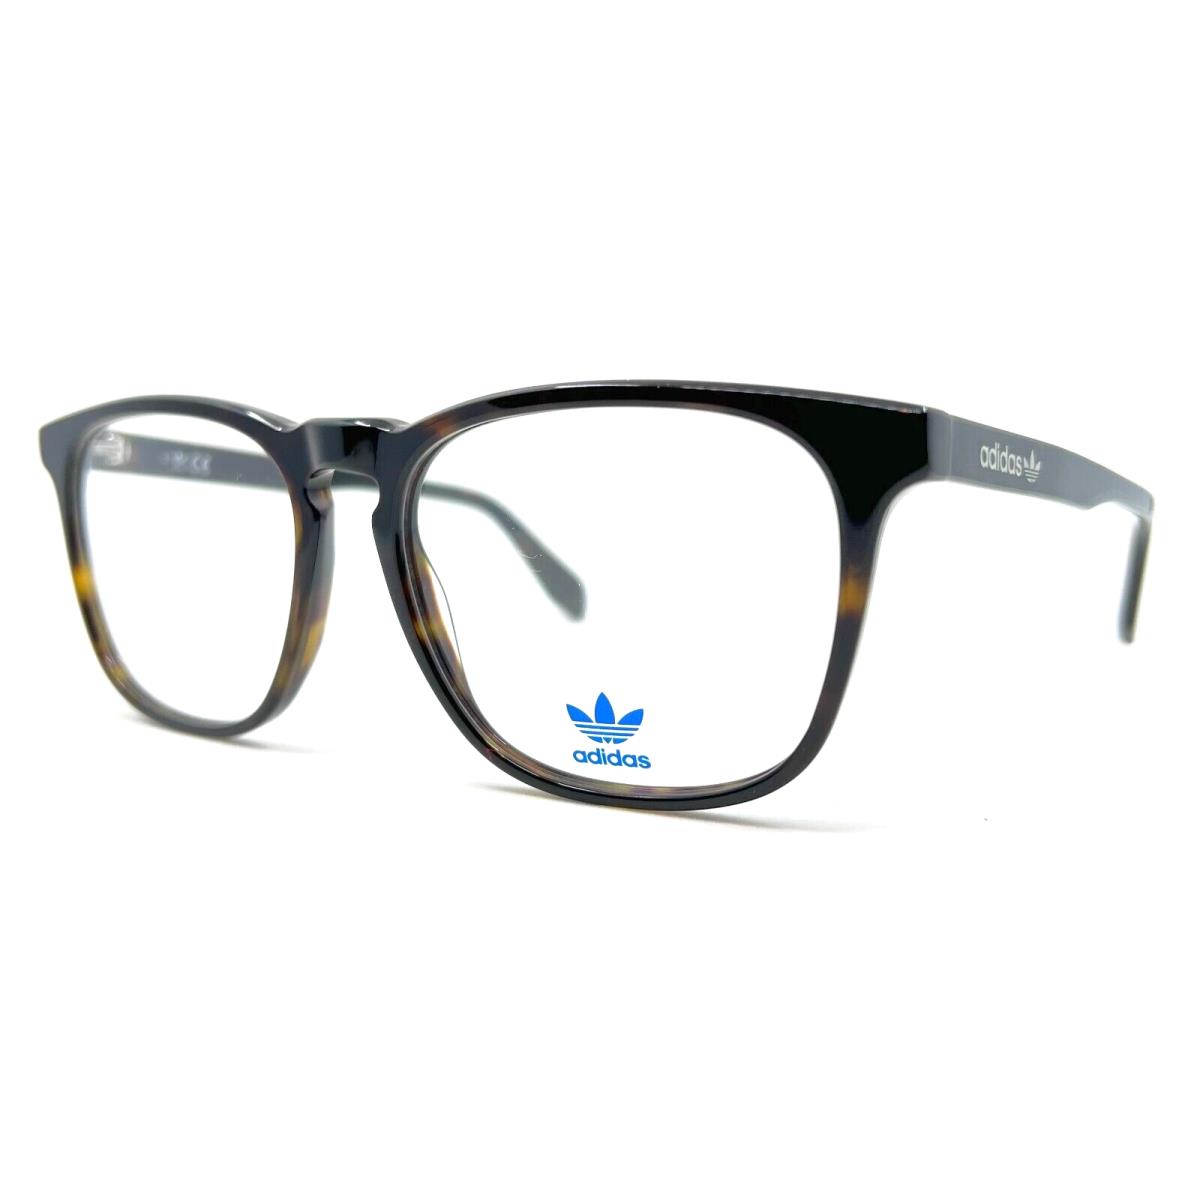 Adidas Originals - OR5020 052 56/16/145 - Tort - Eyeglasses Case